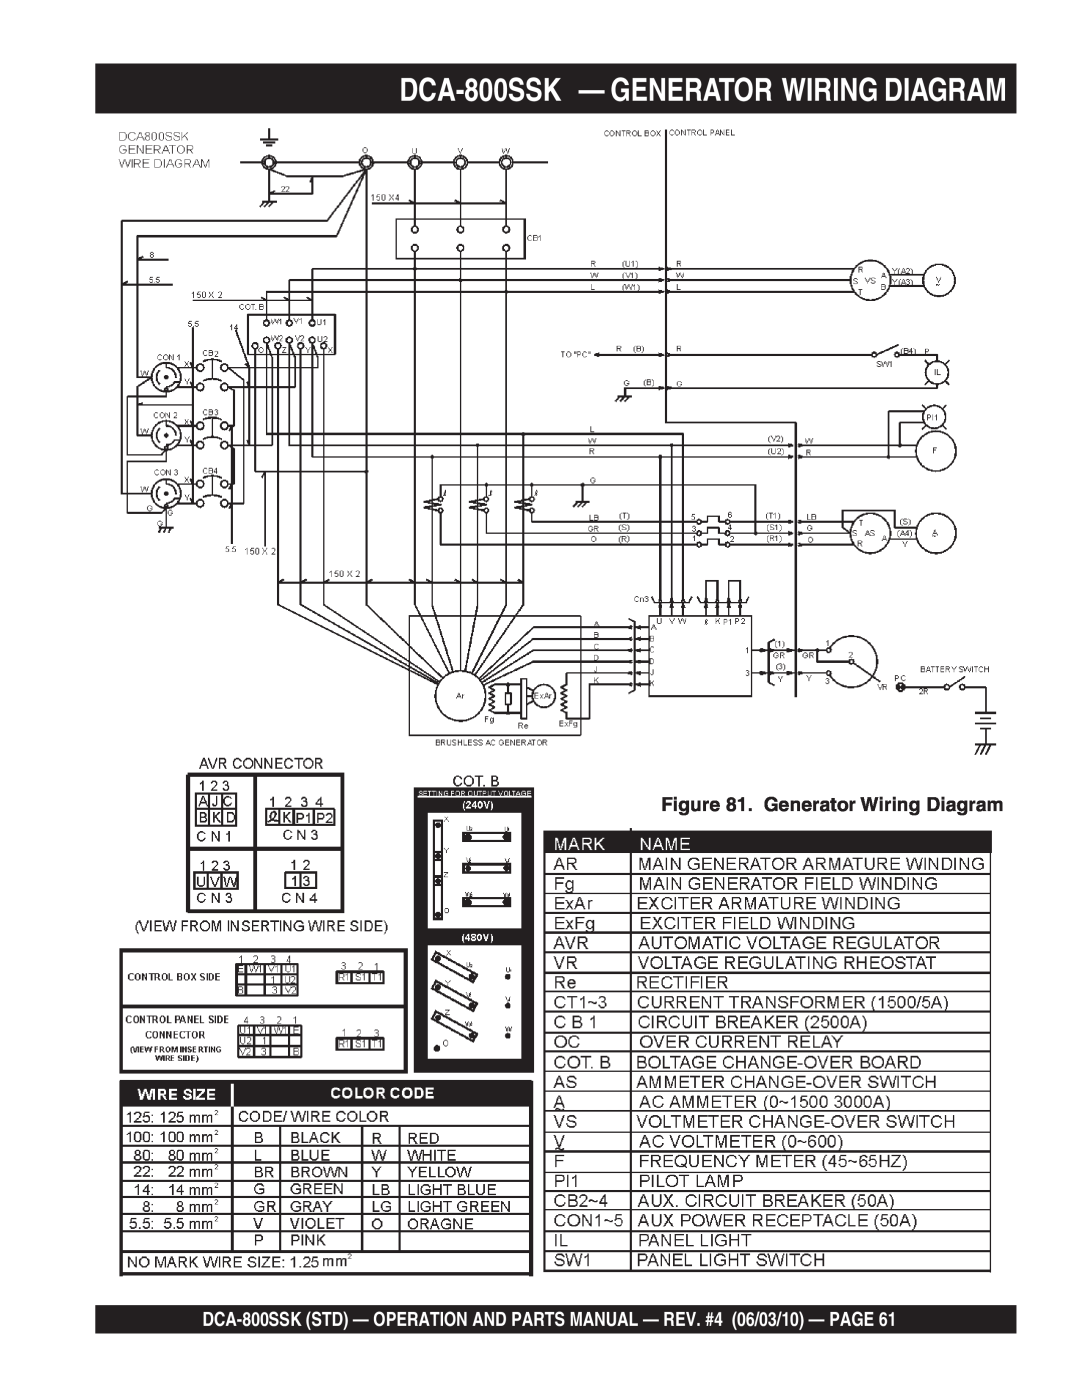 Multiquip operation manual DCA-800SSK - GENERATOR WIRING DIAGRAM, Generator Wiring Diagram 